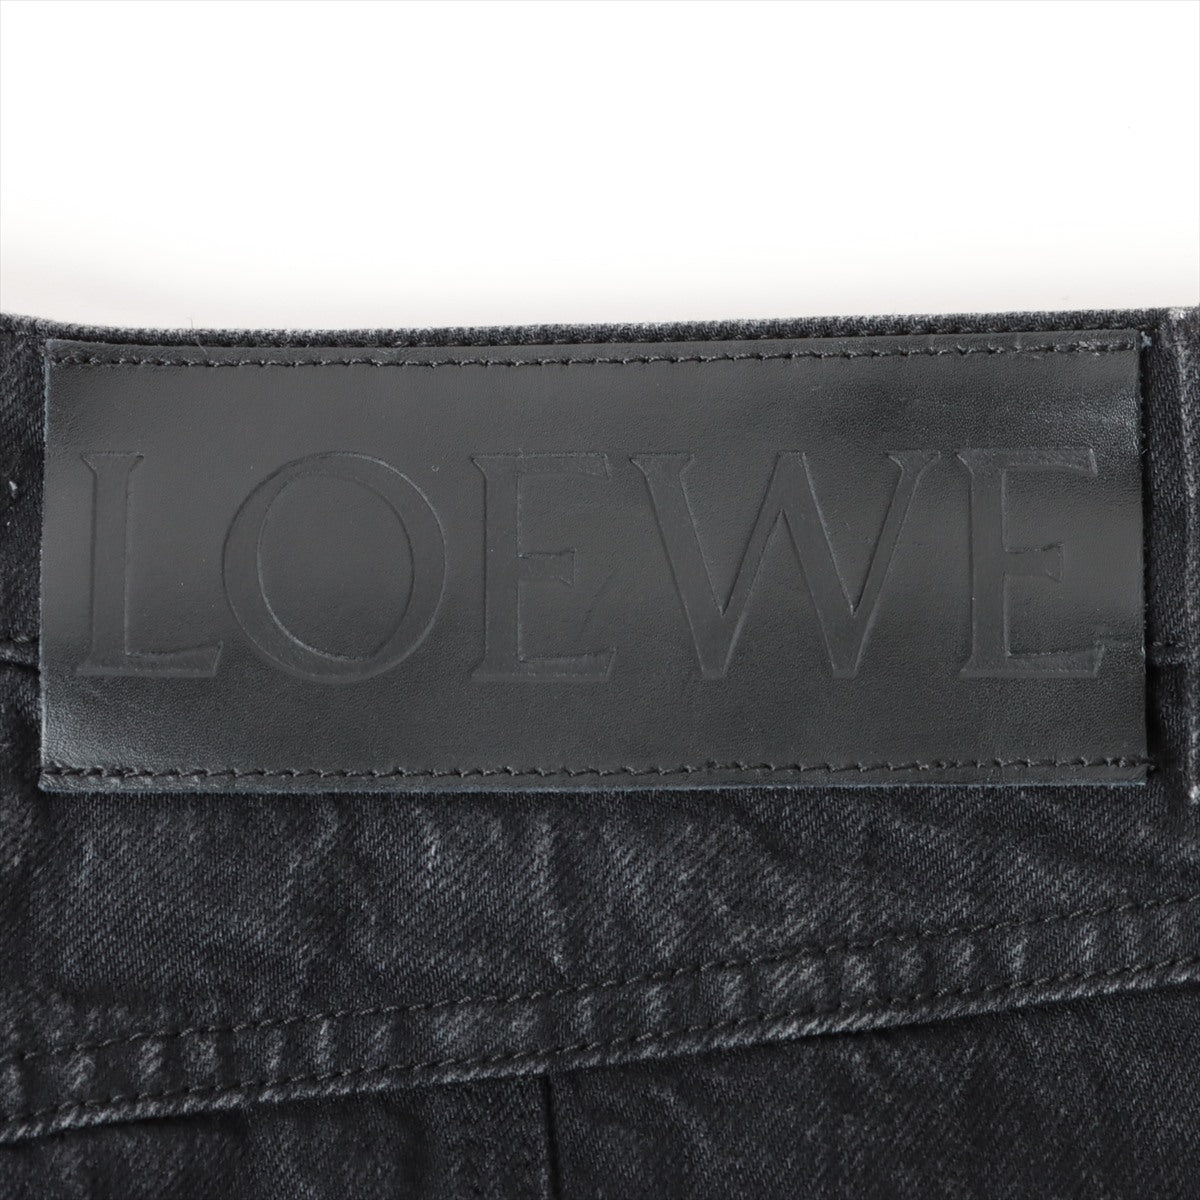 Loewe Cotton Skirt 34 Ladies' Black